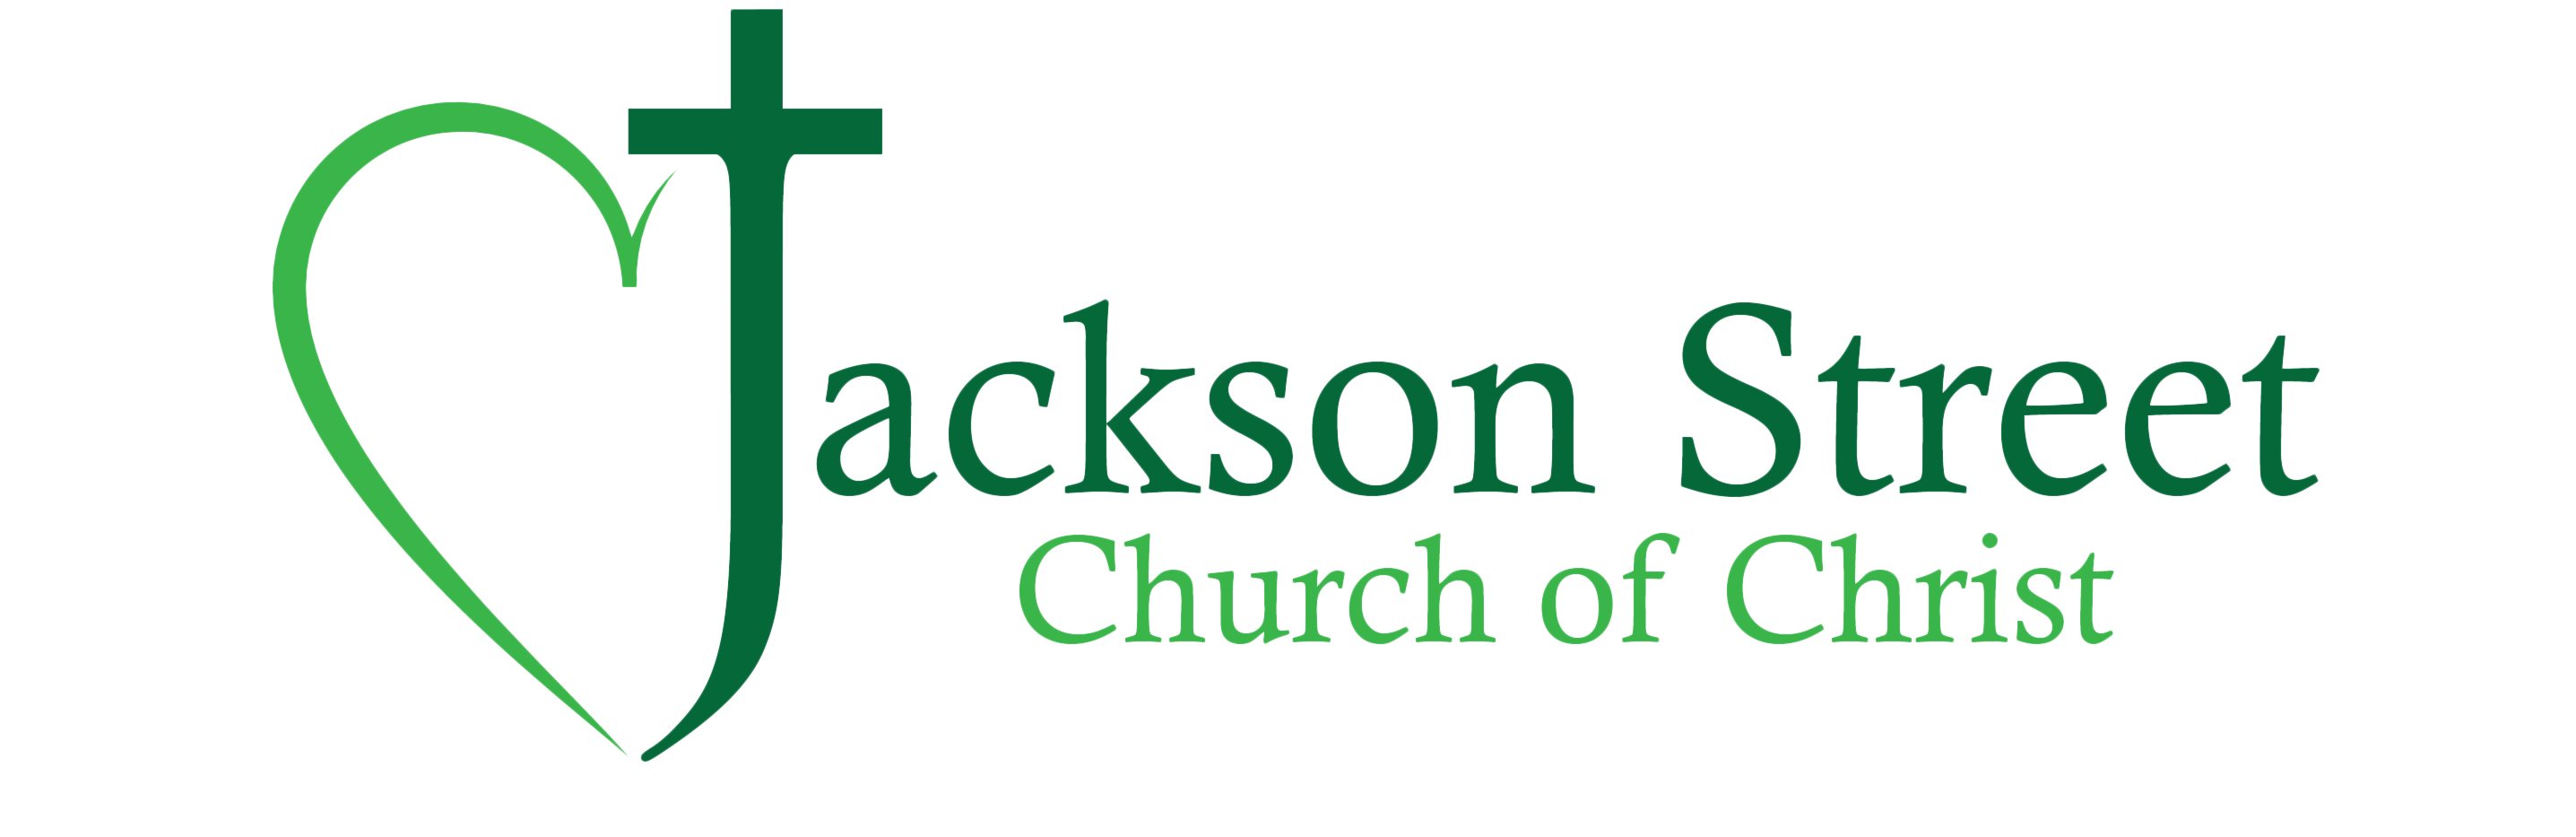 Jackson Street Church of Christ